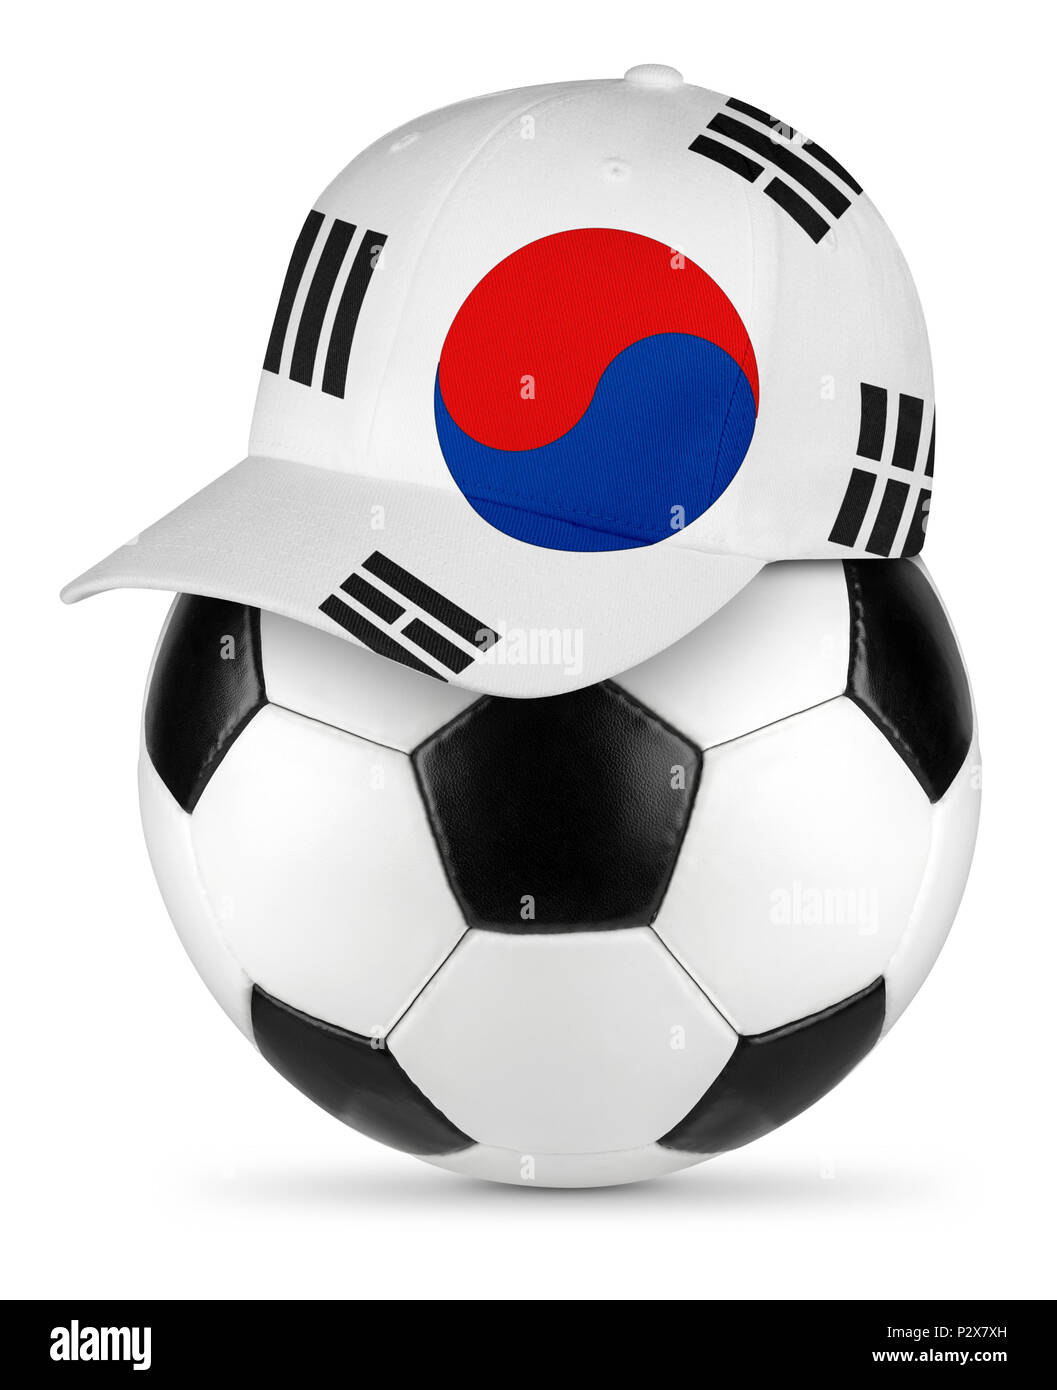 Classic black white leather soccer ball south korea korean flag baseball fan cap isolated background sport football concept Stock Photo